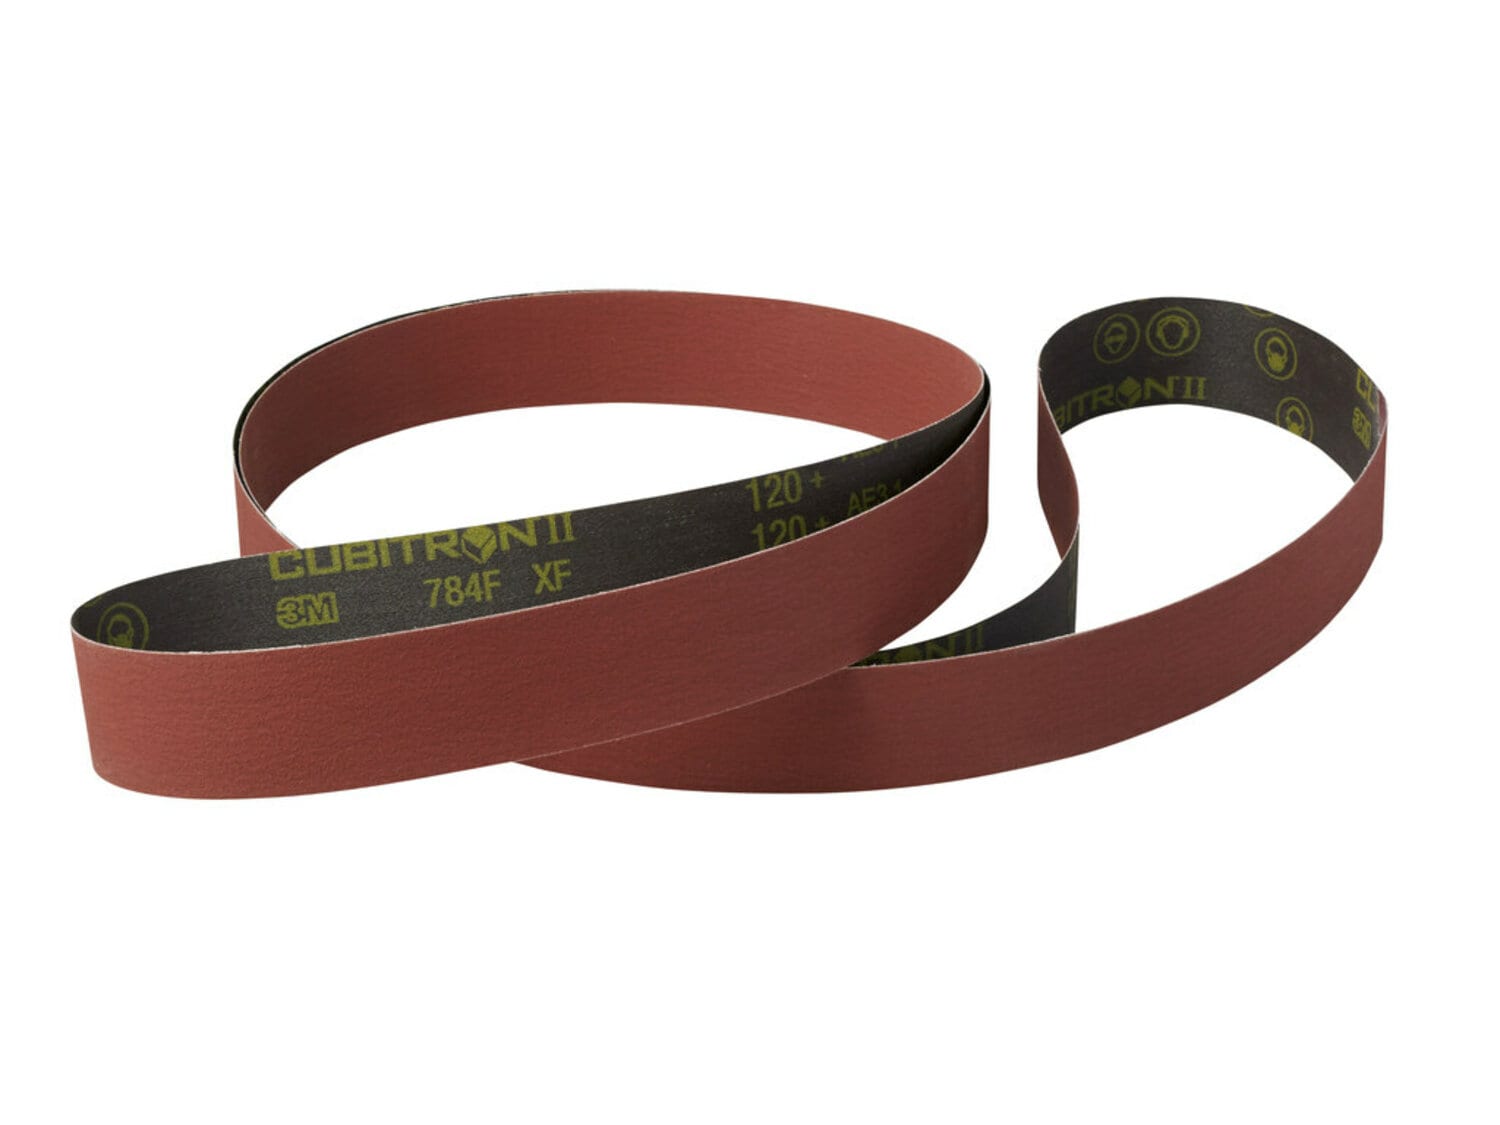 7100224020 - 3M Cubitron ll Cloth Belt 784F, 36+ YF-weight, 12 in x 180 in,
Sine-lok, Special Full-flex, 5 ea/Case